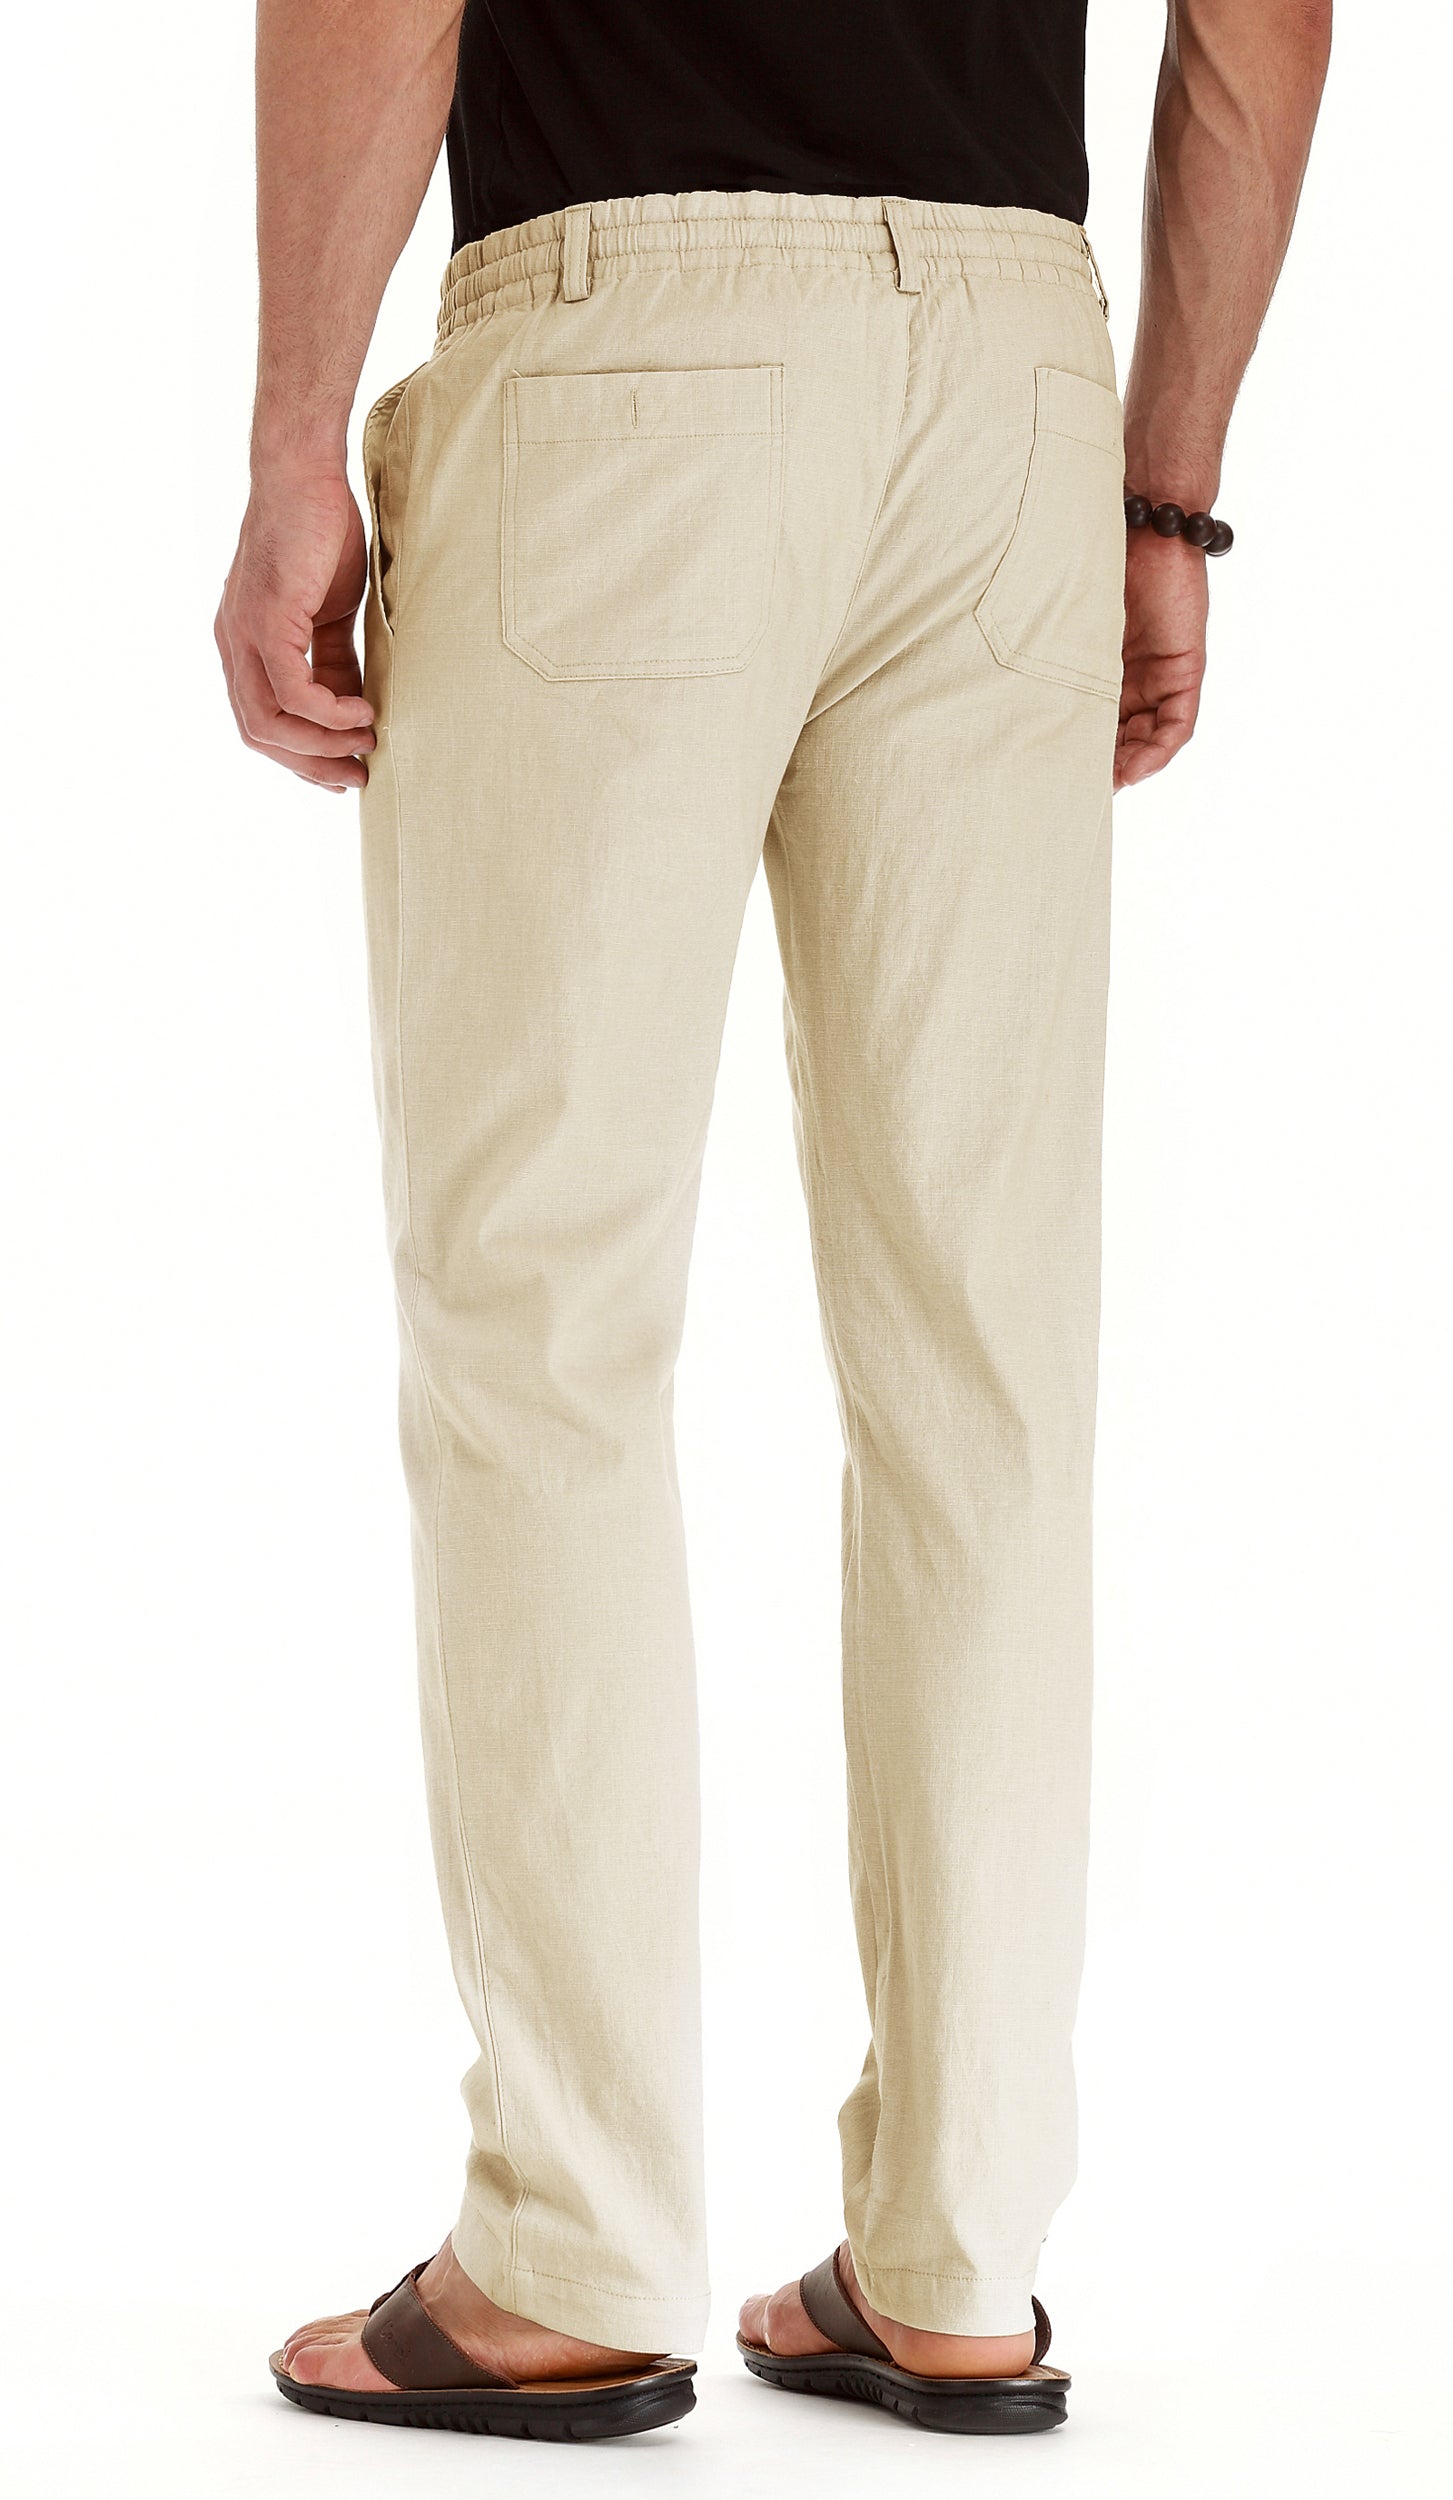 JWD Men's Drawstring Linen Pants Casual Summer Beach Loose Trousers